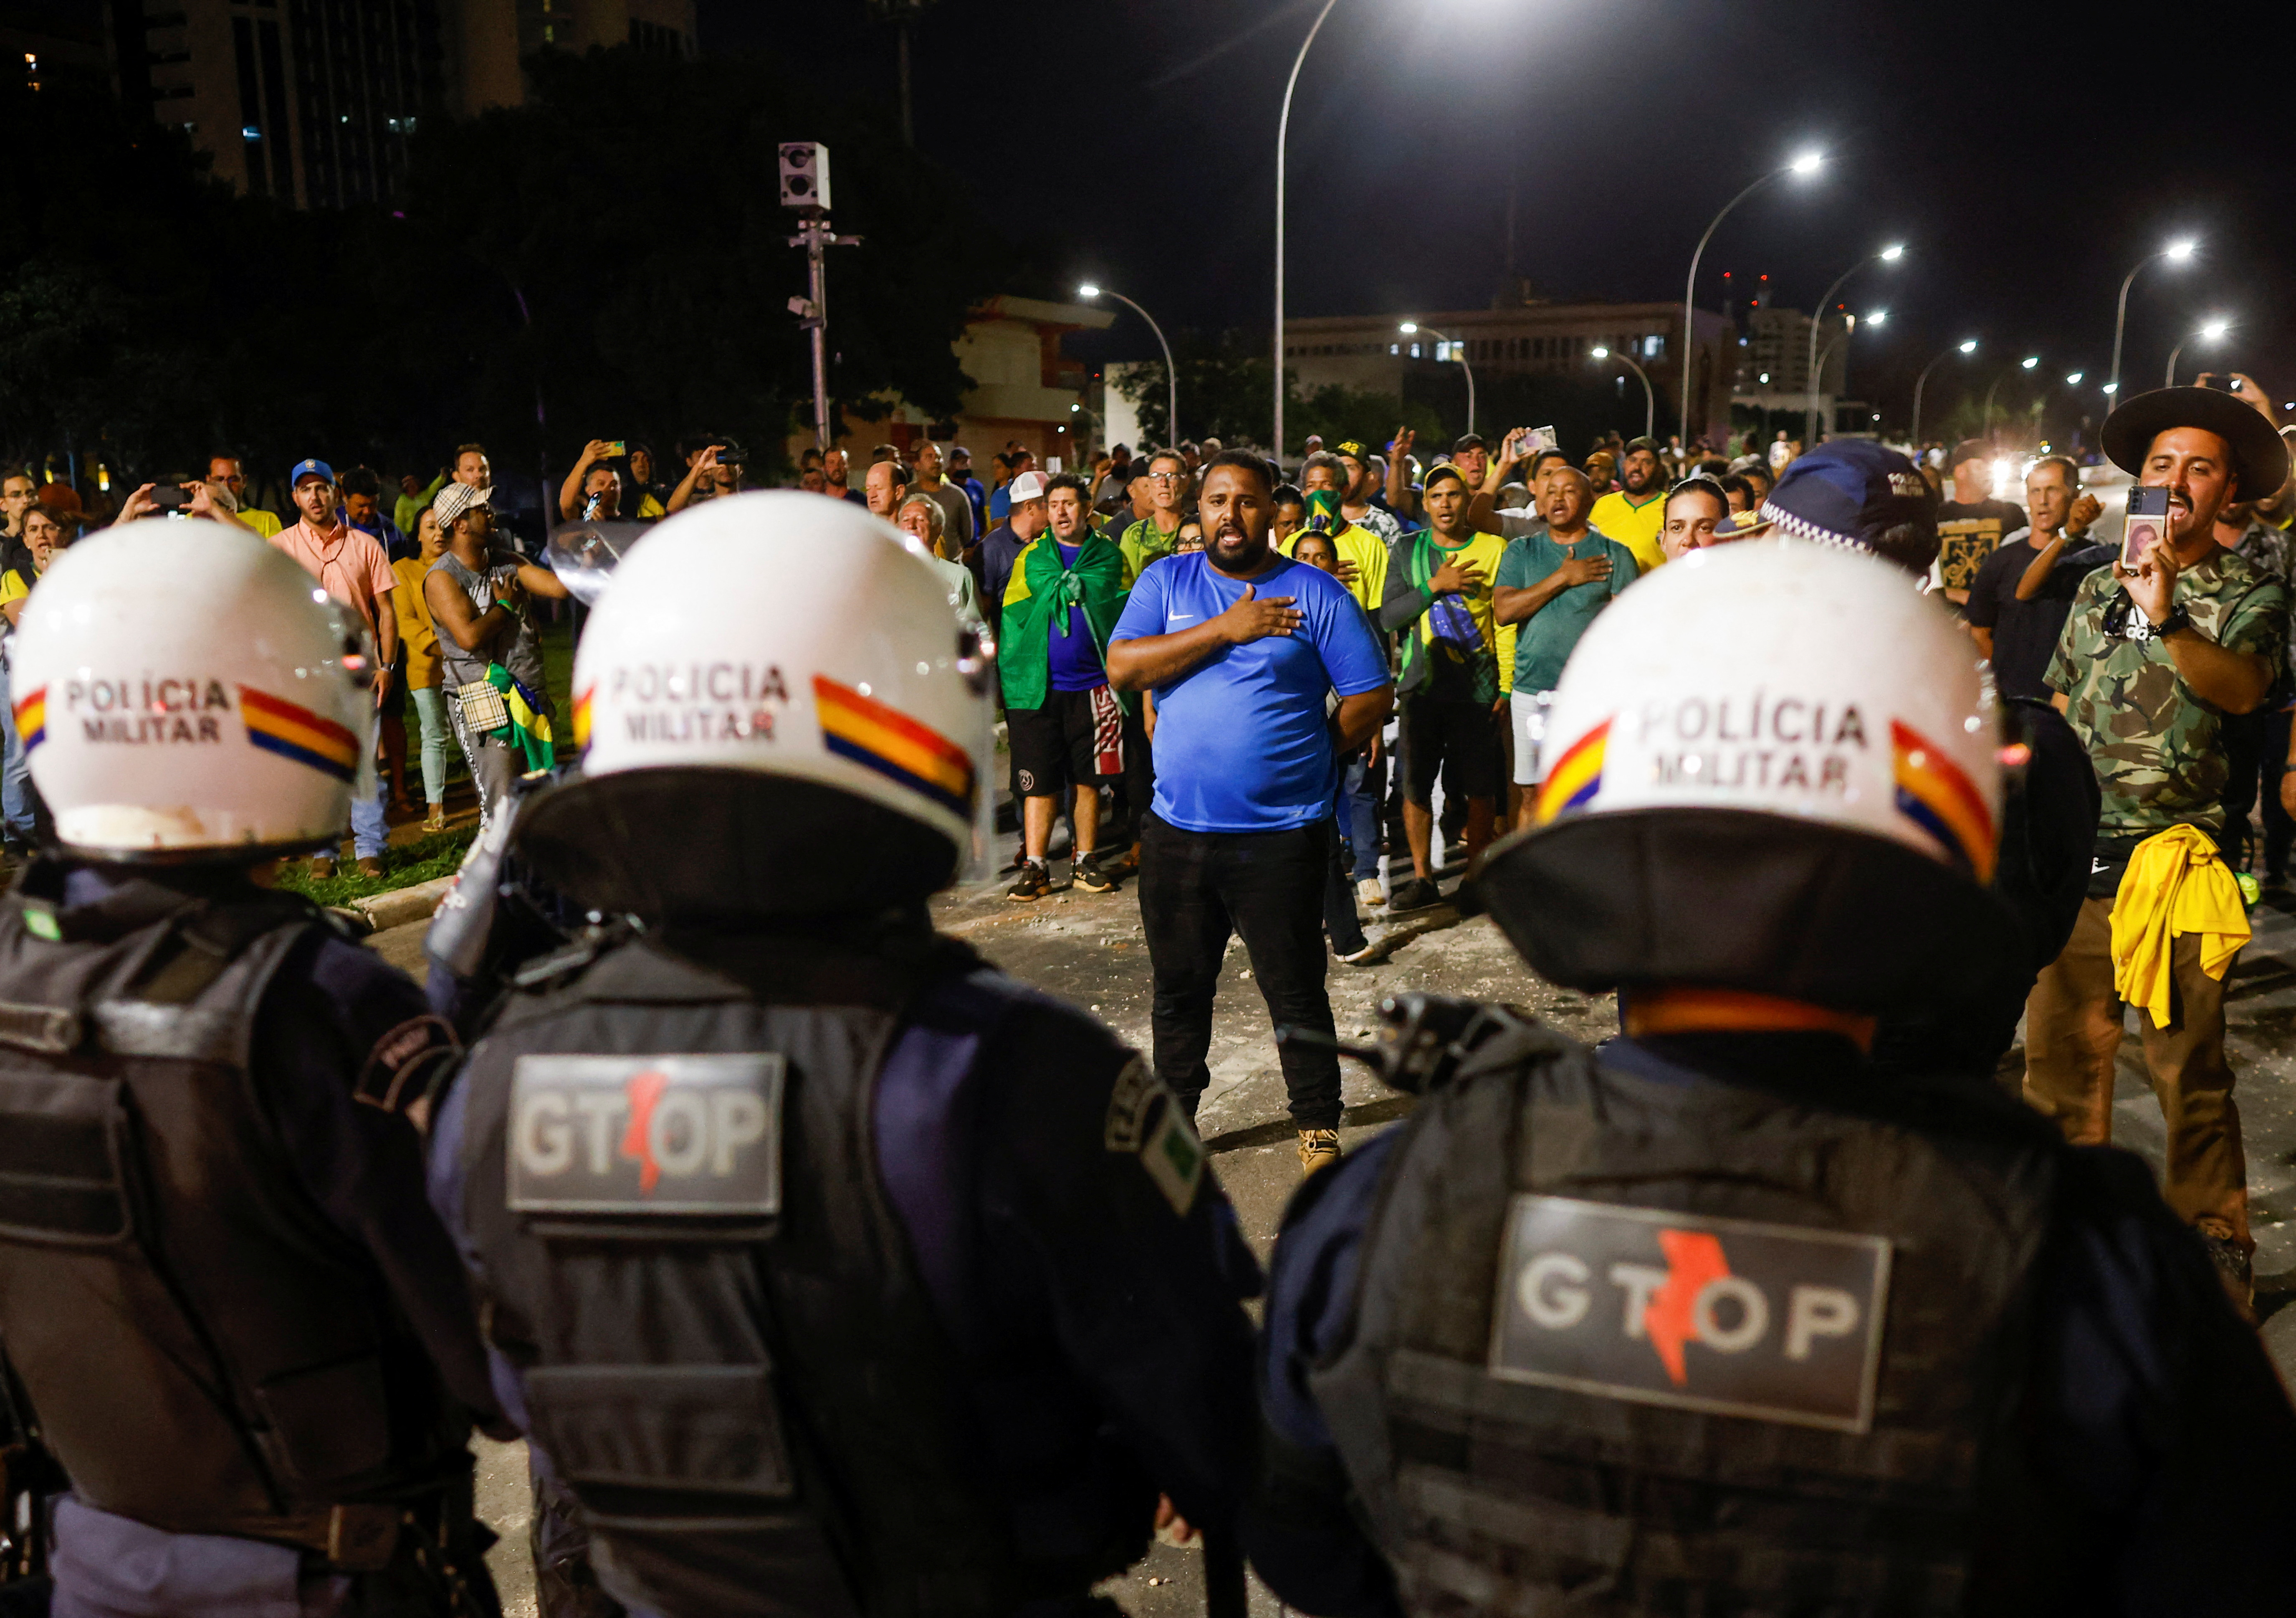 Bolsonaro supporters reject Lula's election victory in Brazil (REUTERS/Adriano Machado)